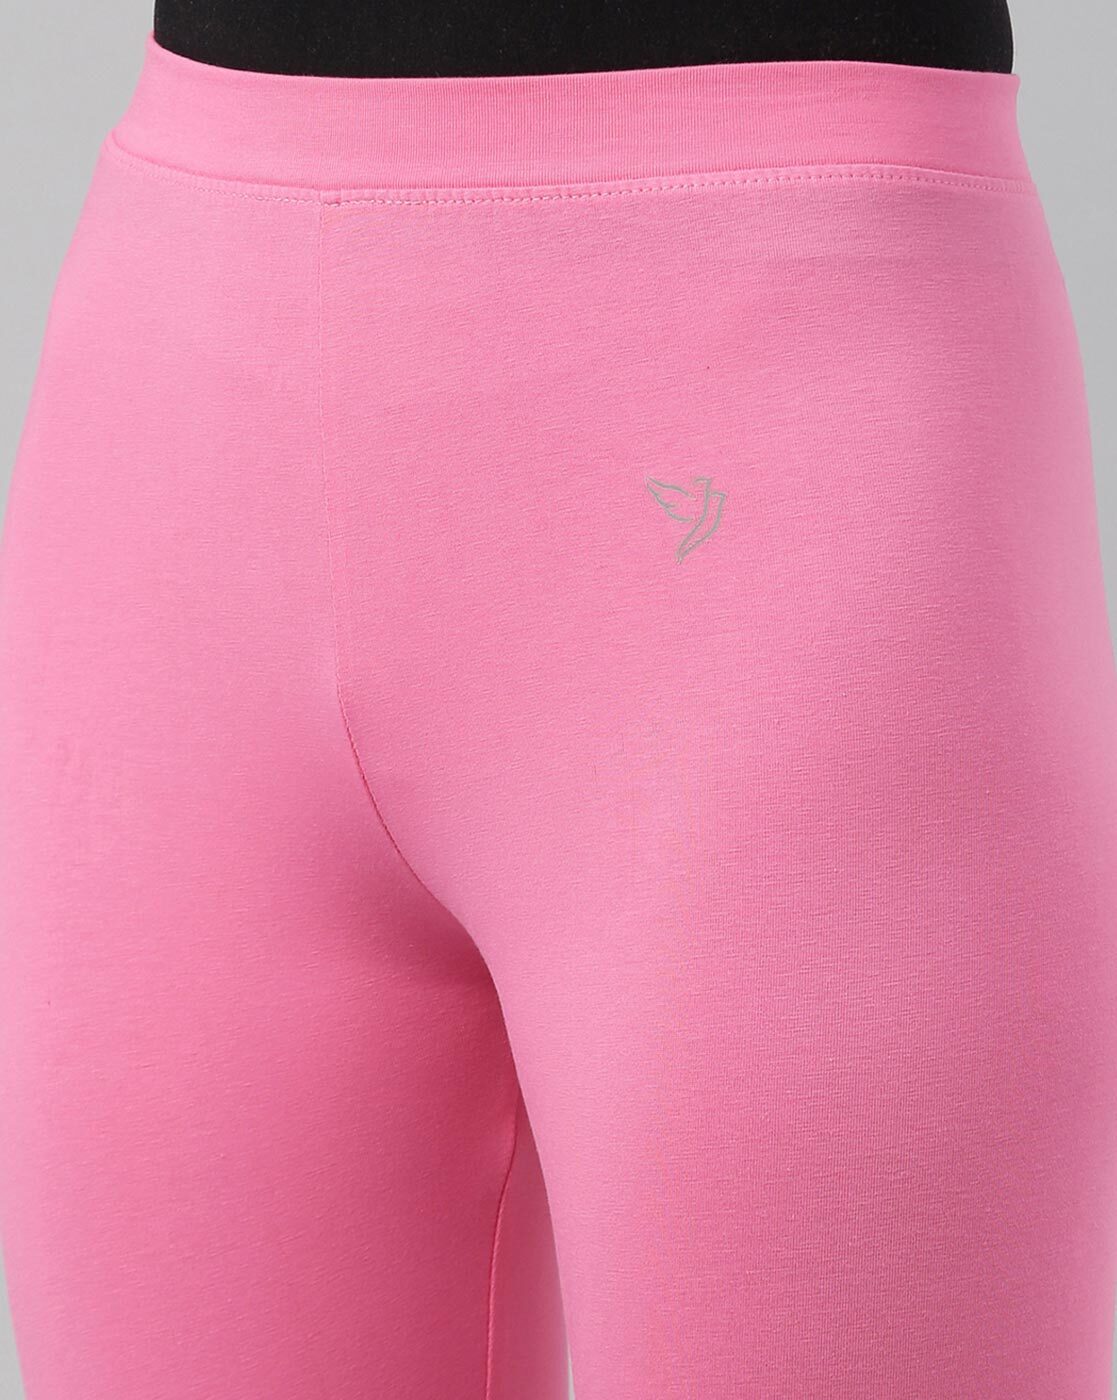 Twin Birds Mystic Pink Girls Legging - Get Best Price from